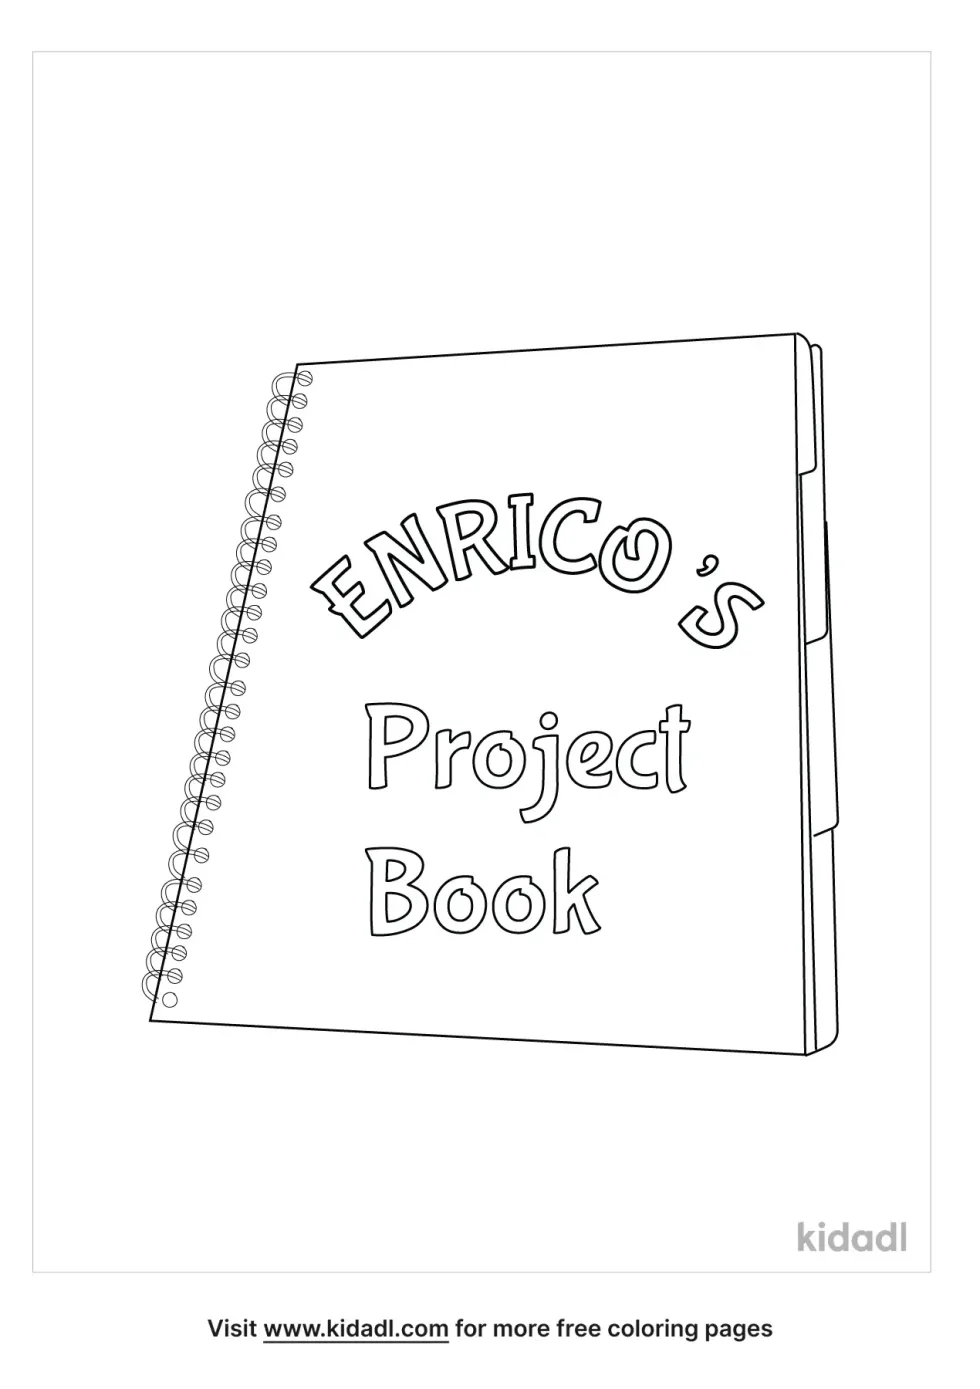 Enrico's Project Book